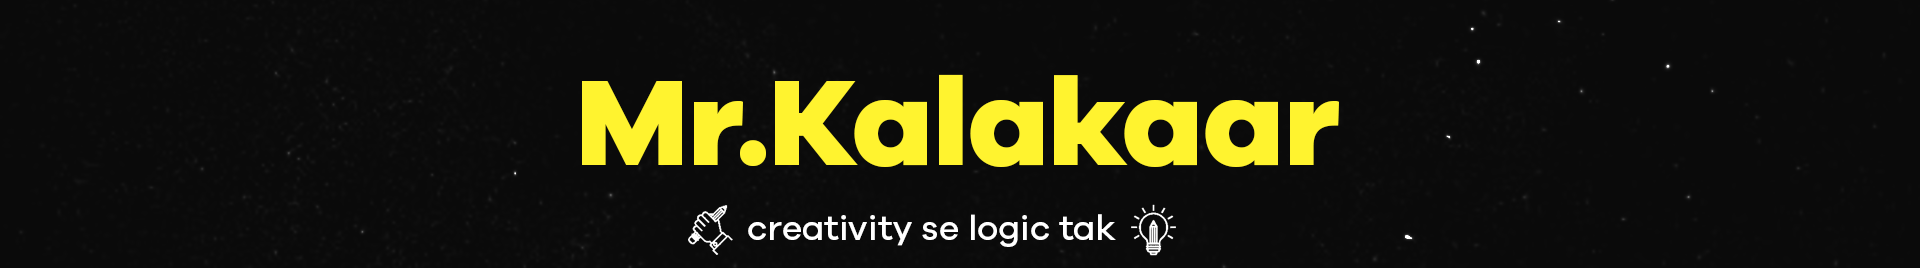 Akash vatsa's profile banner